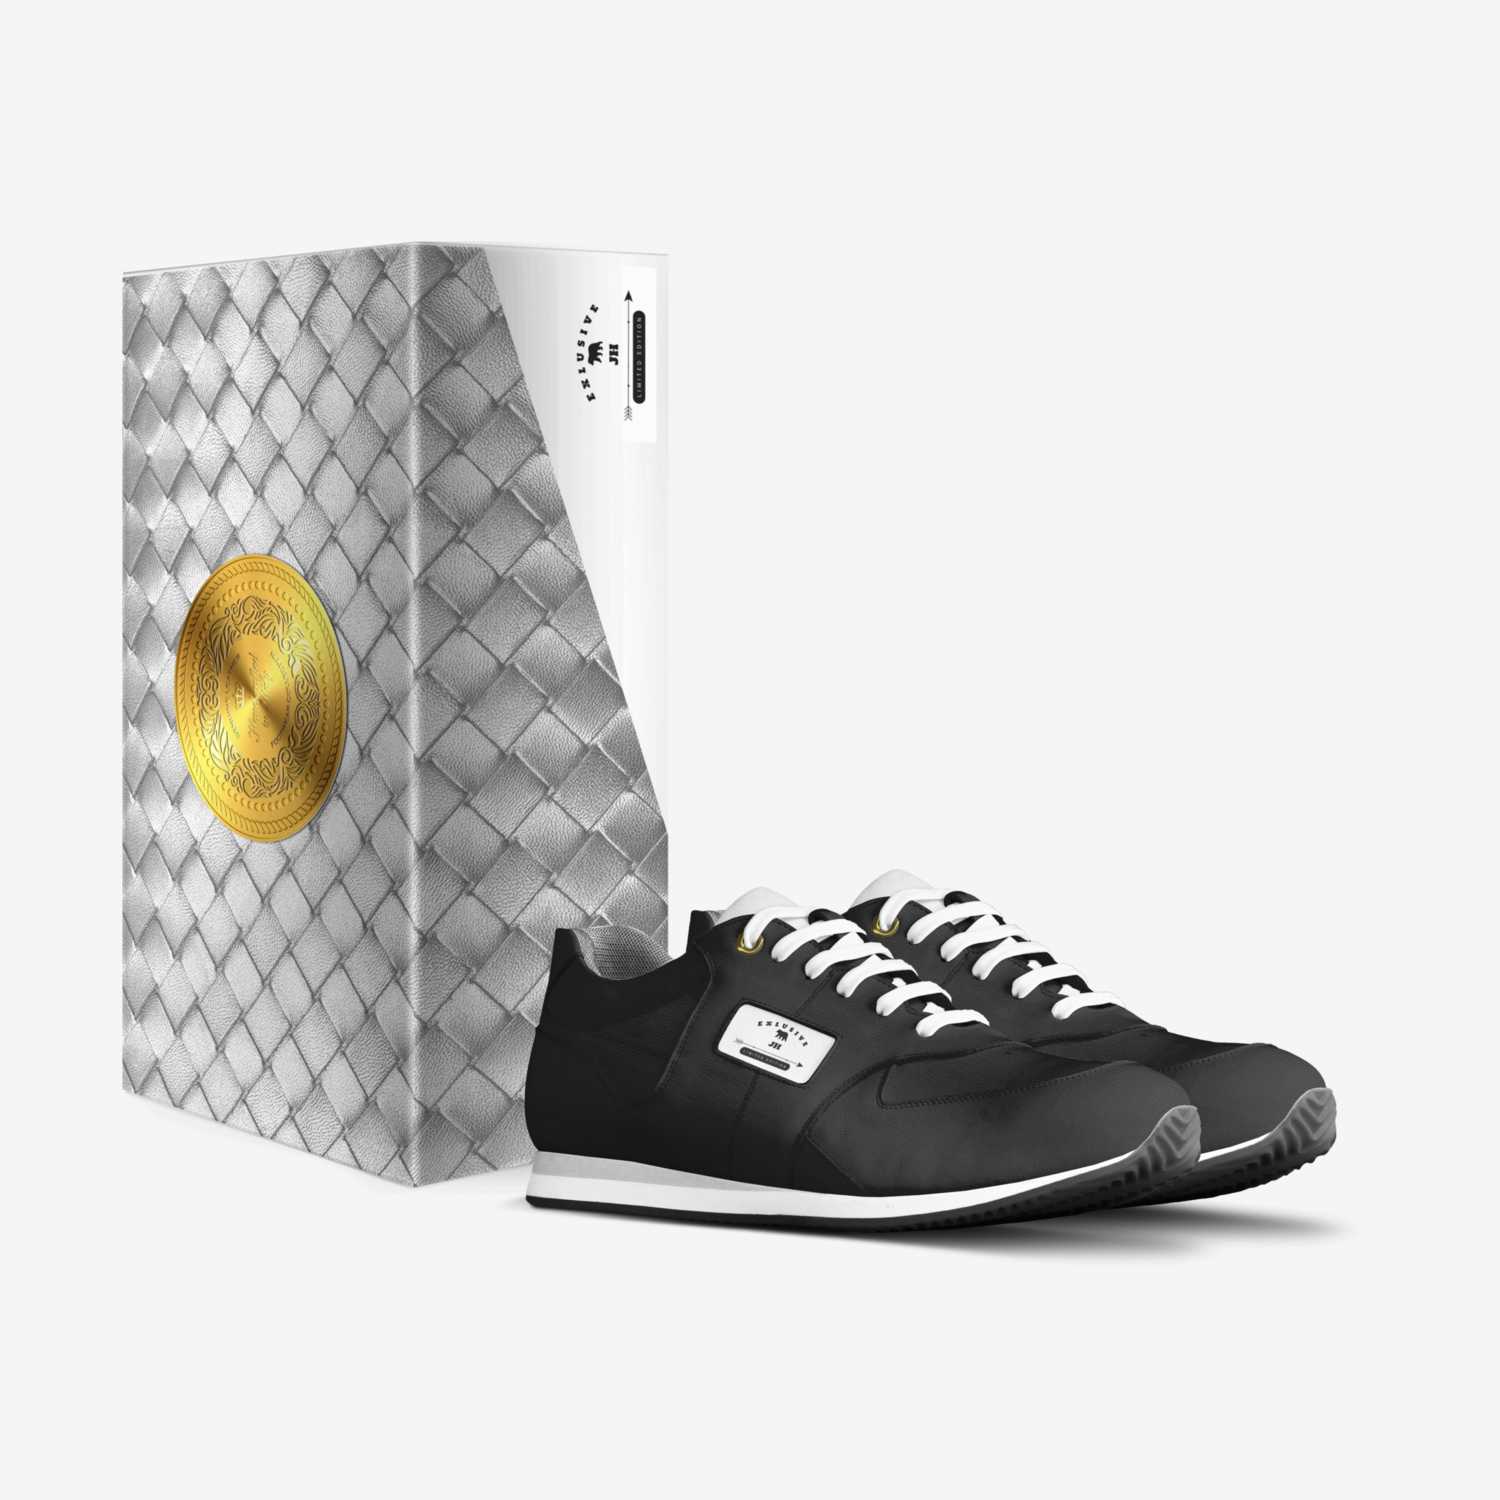 J Money 1's custom made in Italy shoes by Jaquoi Harrington | Box view